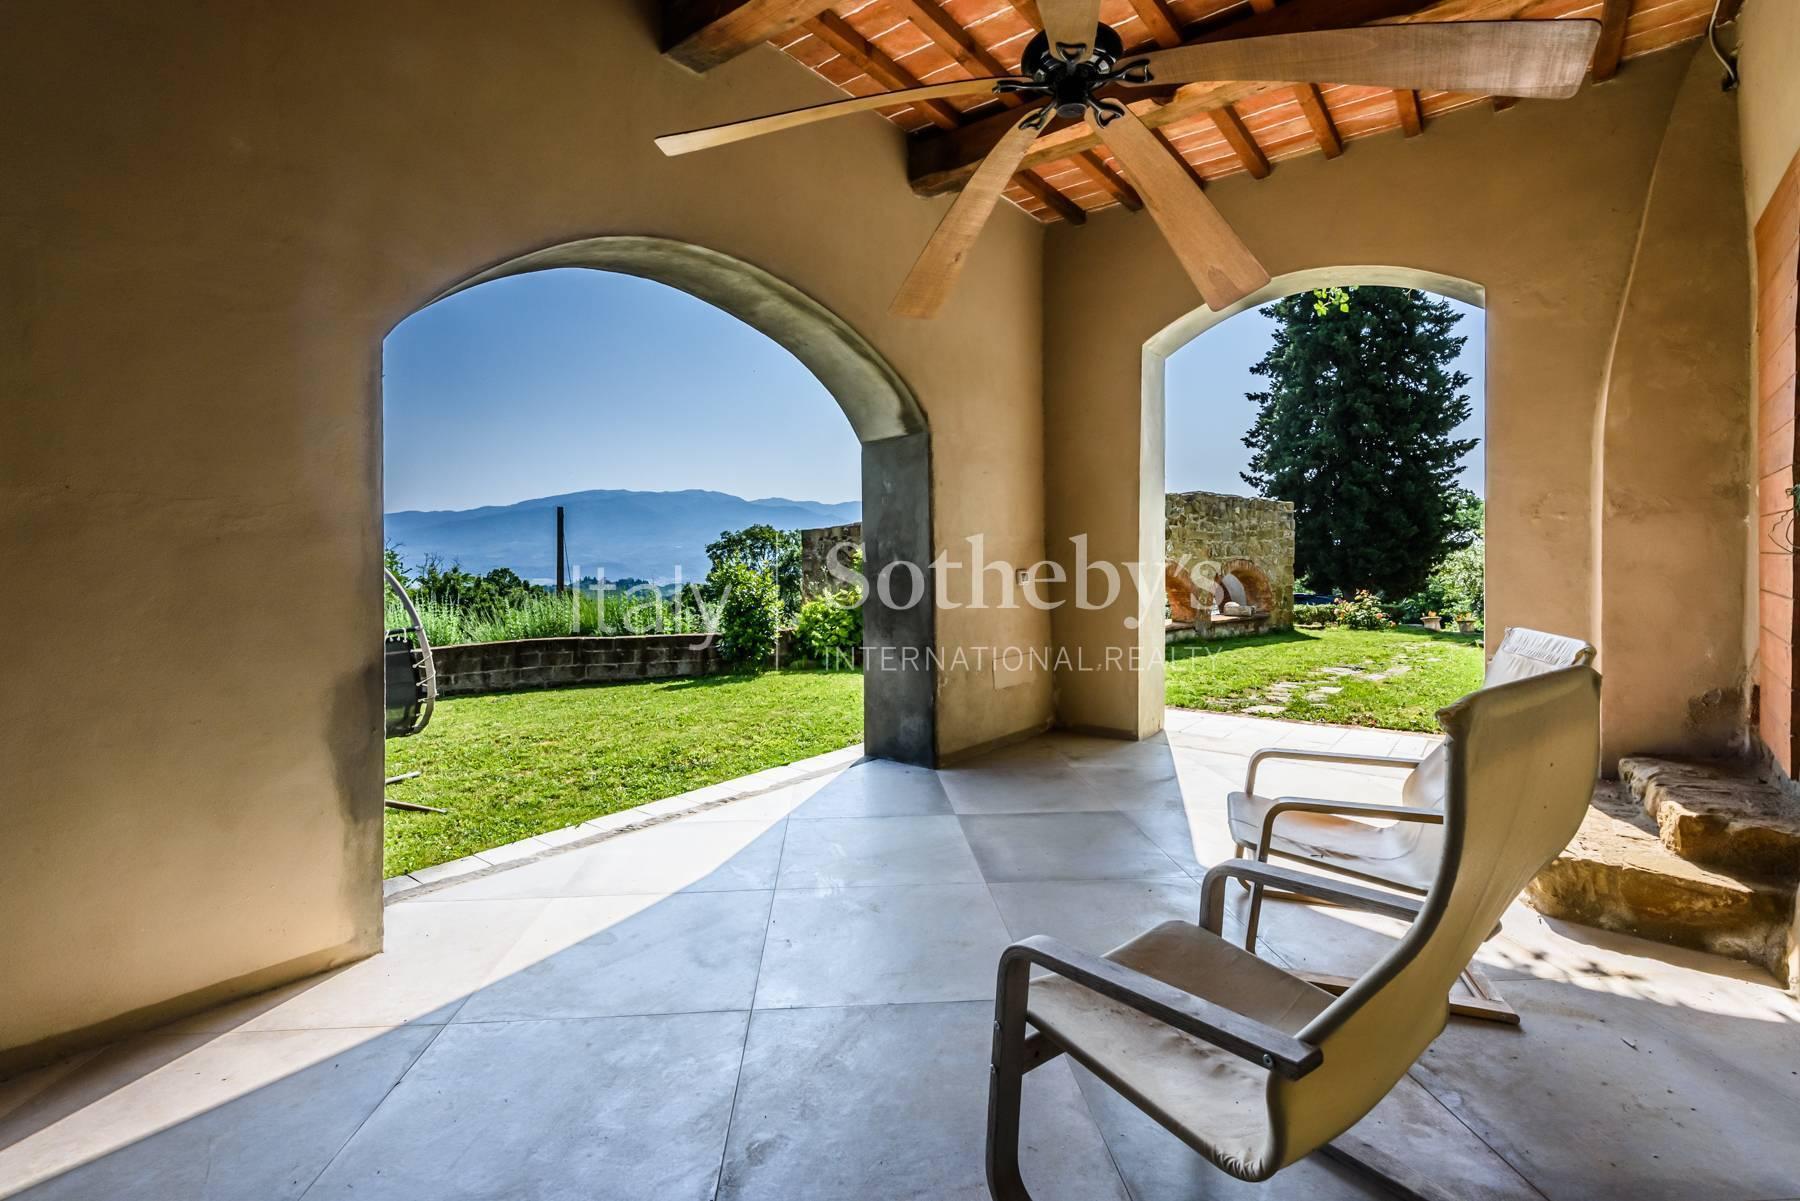 Renaissance Villa with italian garden and panoramic view - 3